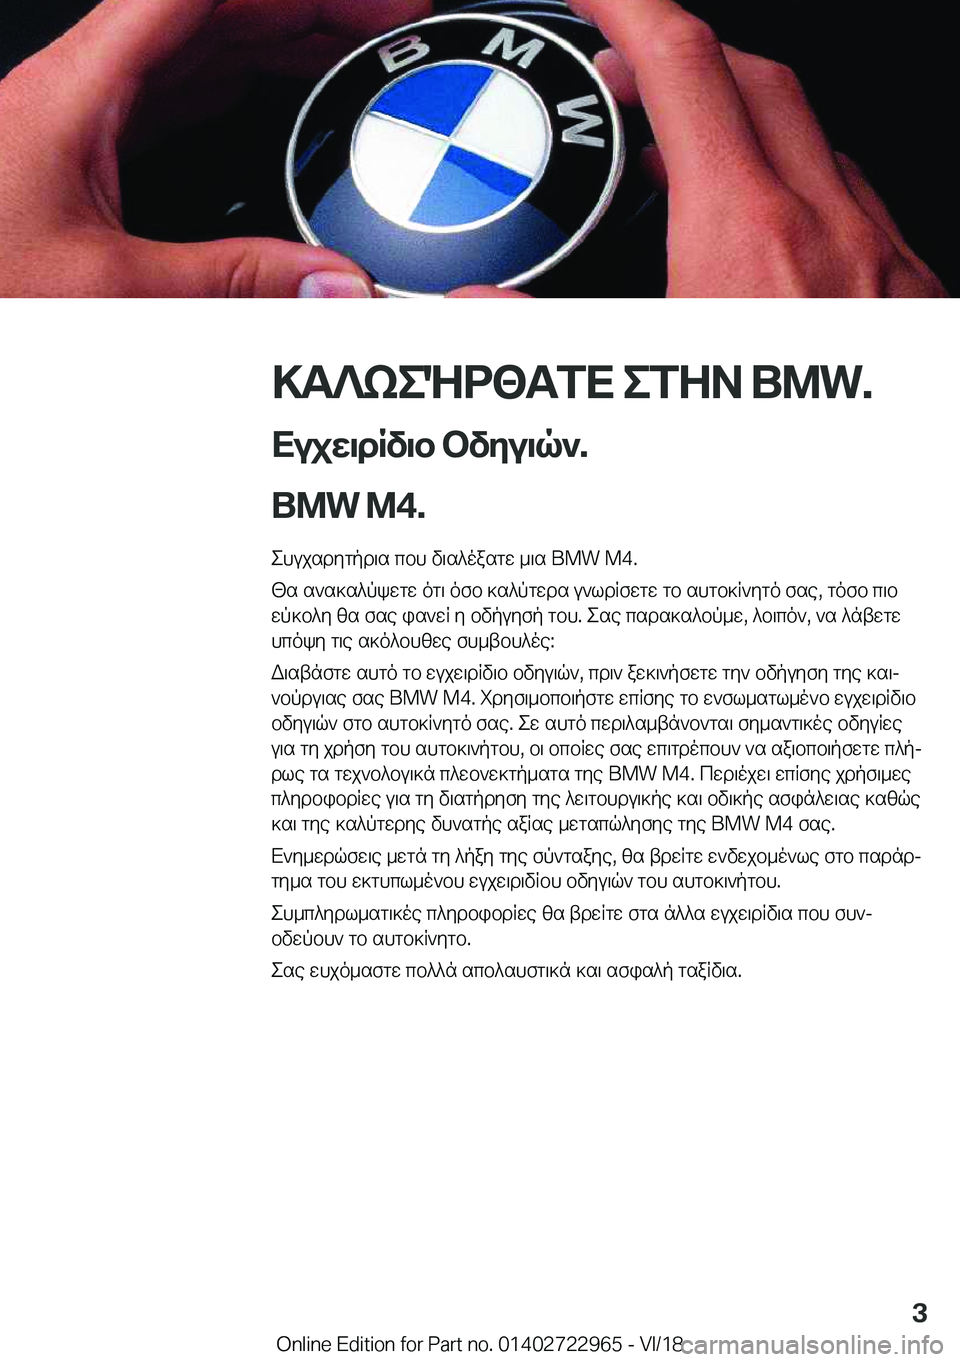 BMW M4 2019  ΟΔΗΓΌΣ ΧΡΉΣΗΣ (in Greek) >T?keNd<TfX�efZA��B�M�W�.
Xujw\dRv\b�bvZu\q`�.
�B�M�W��M�4�. ehujsdygpd\s�cbh�v\s^oasgw�_\s��B�M�W��M�4�.[s�s`s]s^pkwg